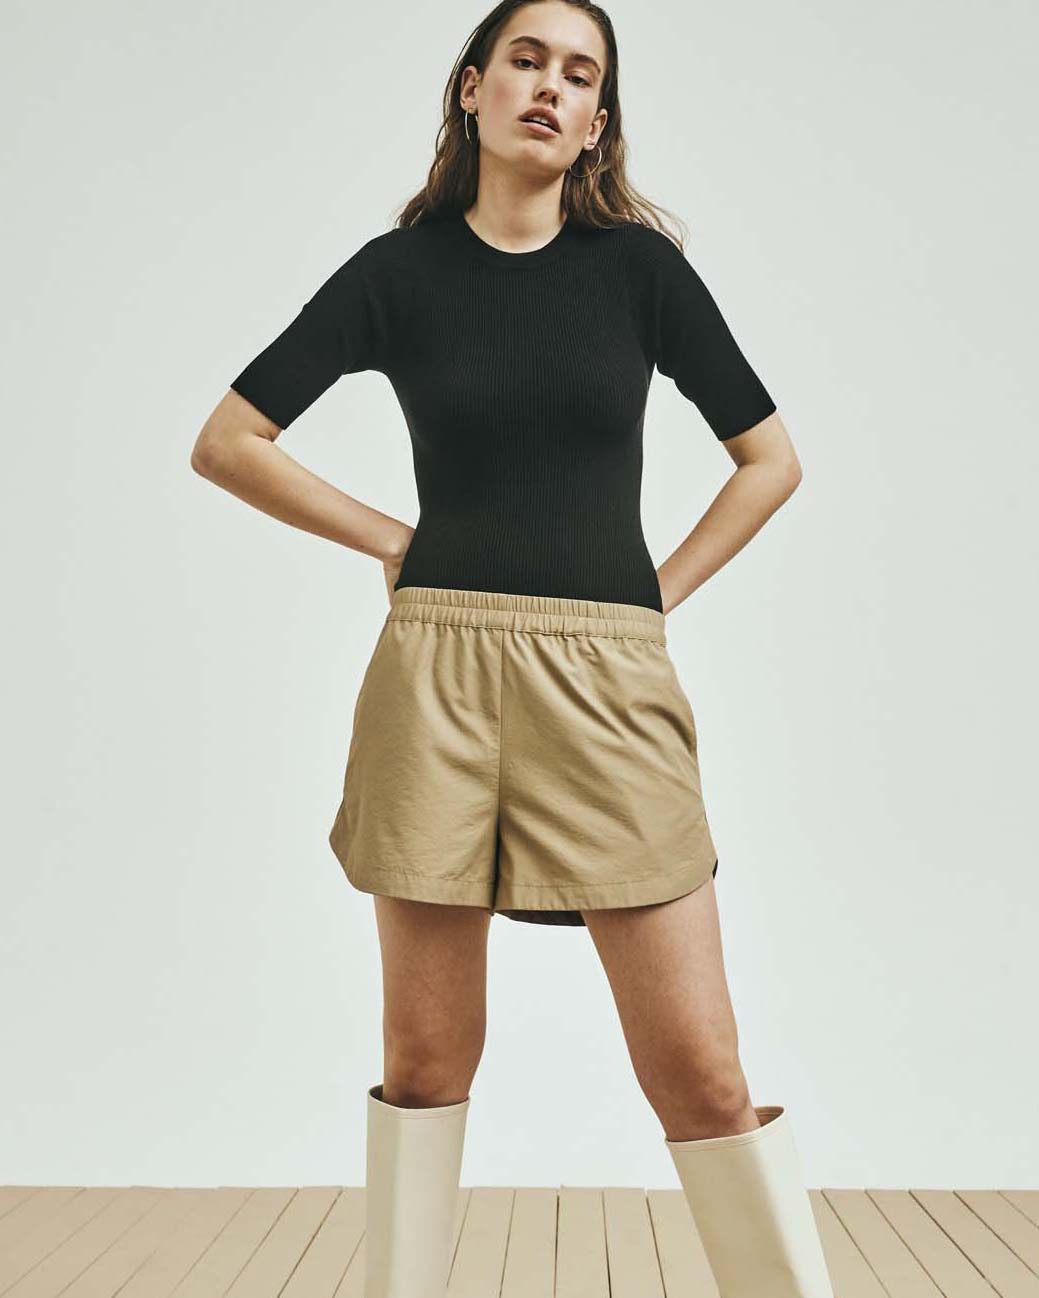 Coras shorts - Light brown - M